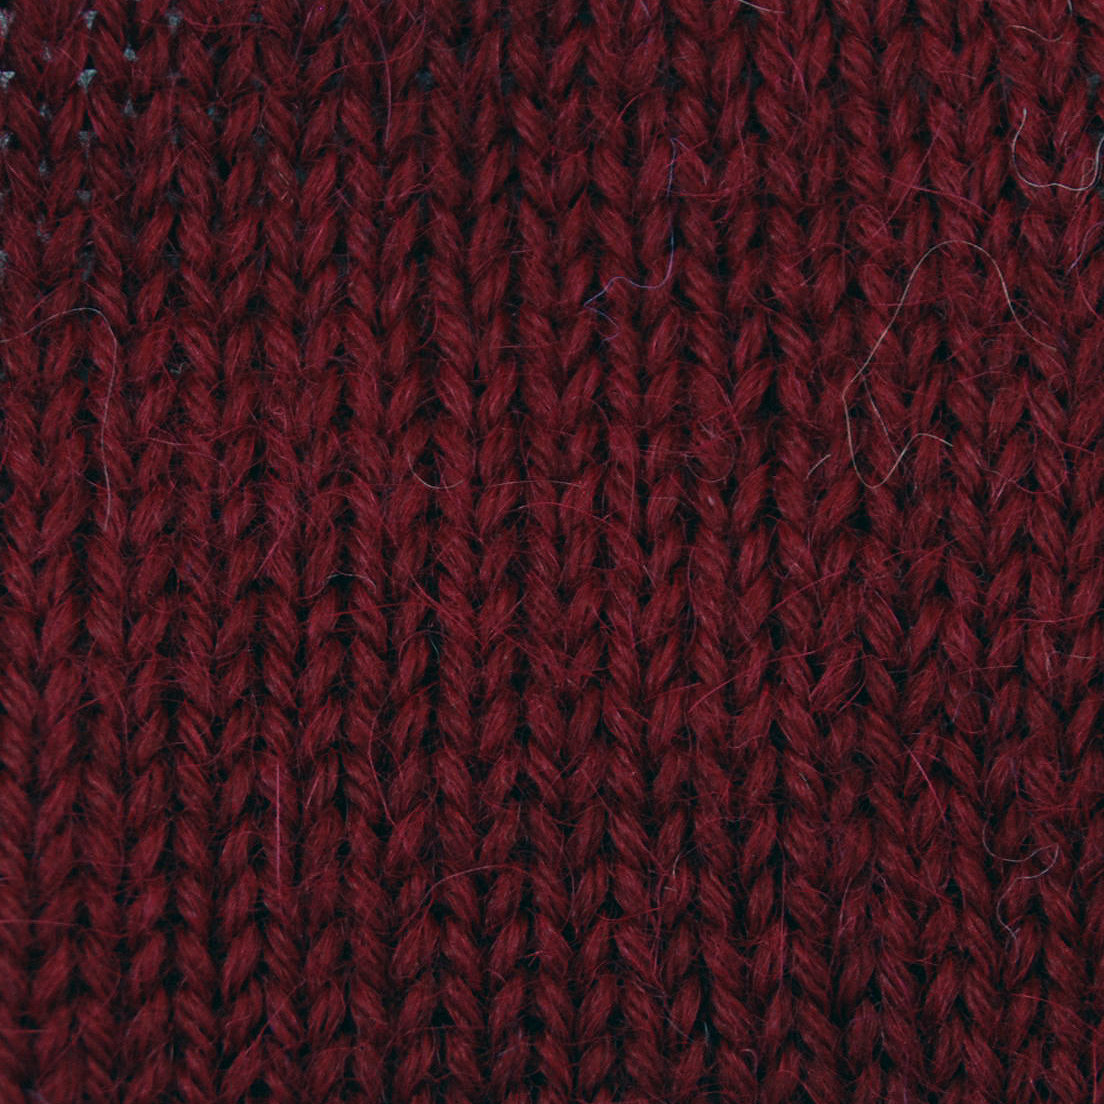 Alpaca Yarn - Thick & Thin Red